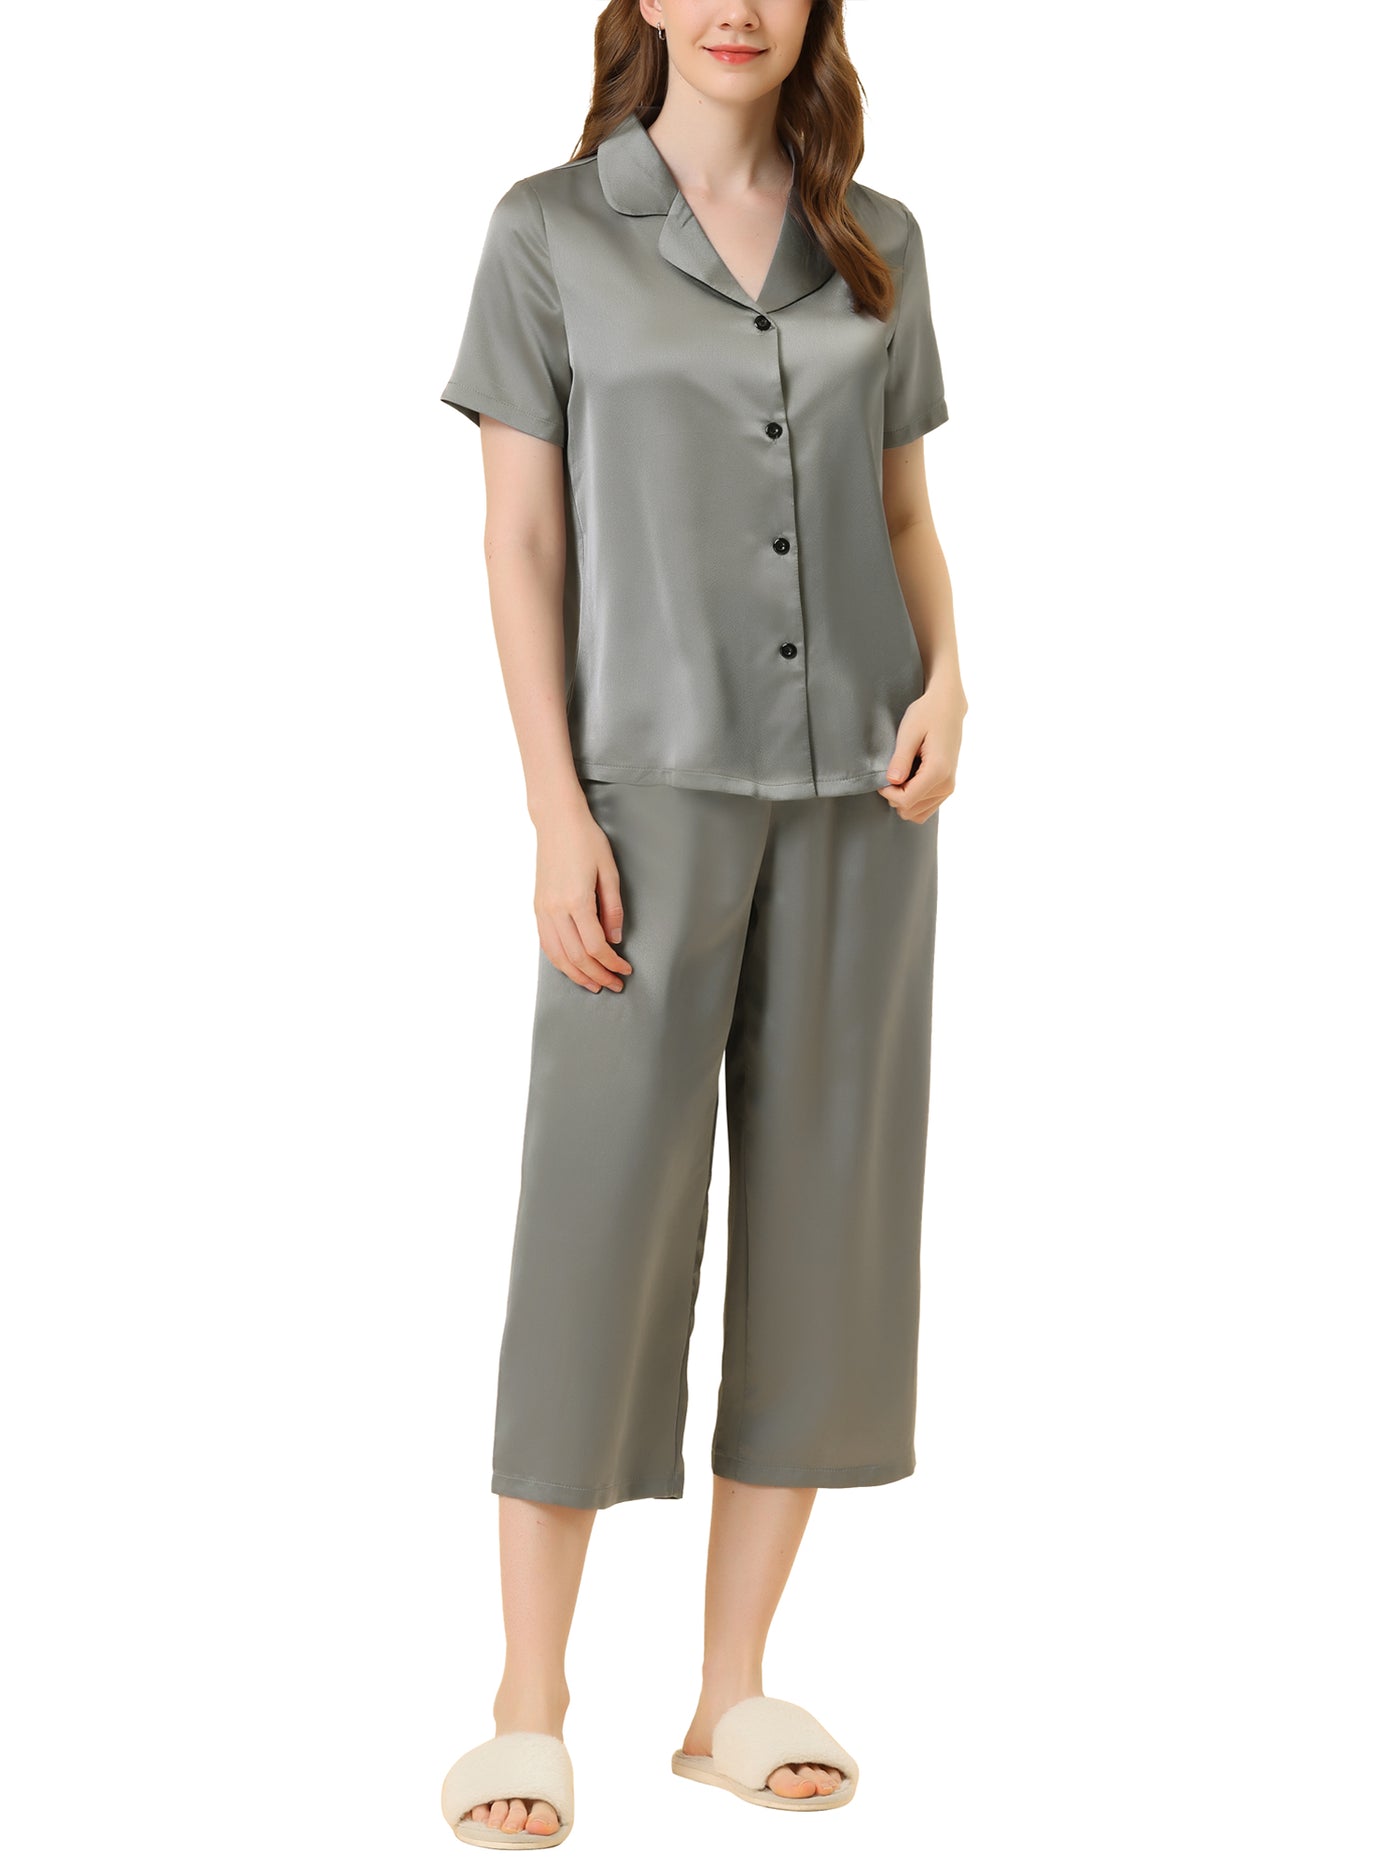 Bublédon Women's Pajama Loungewear Tops and Capri Pants Satin Sets